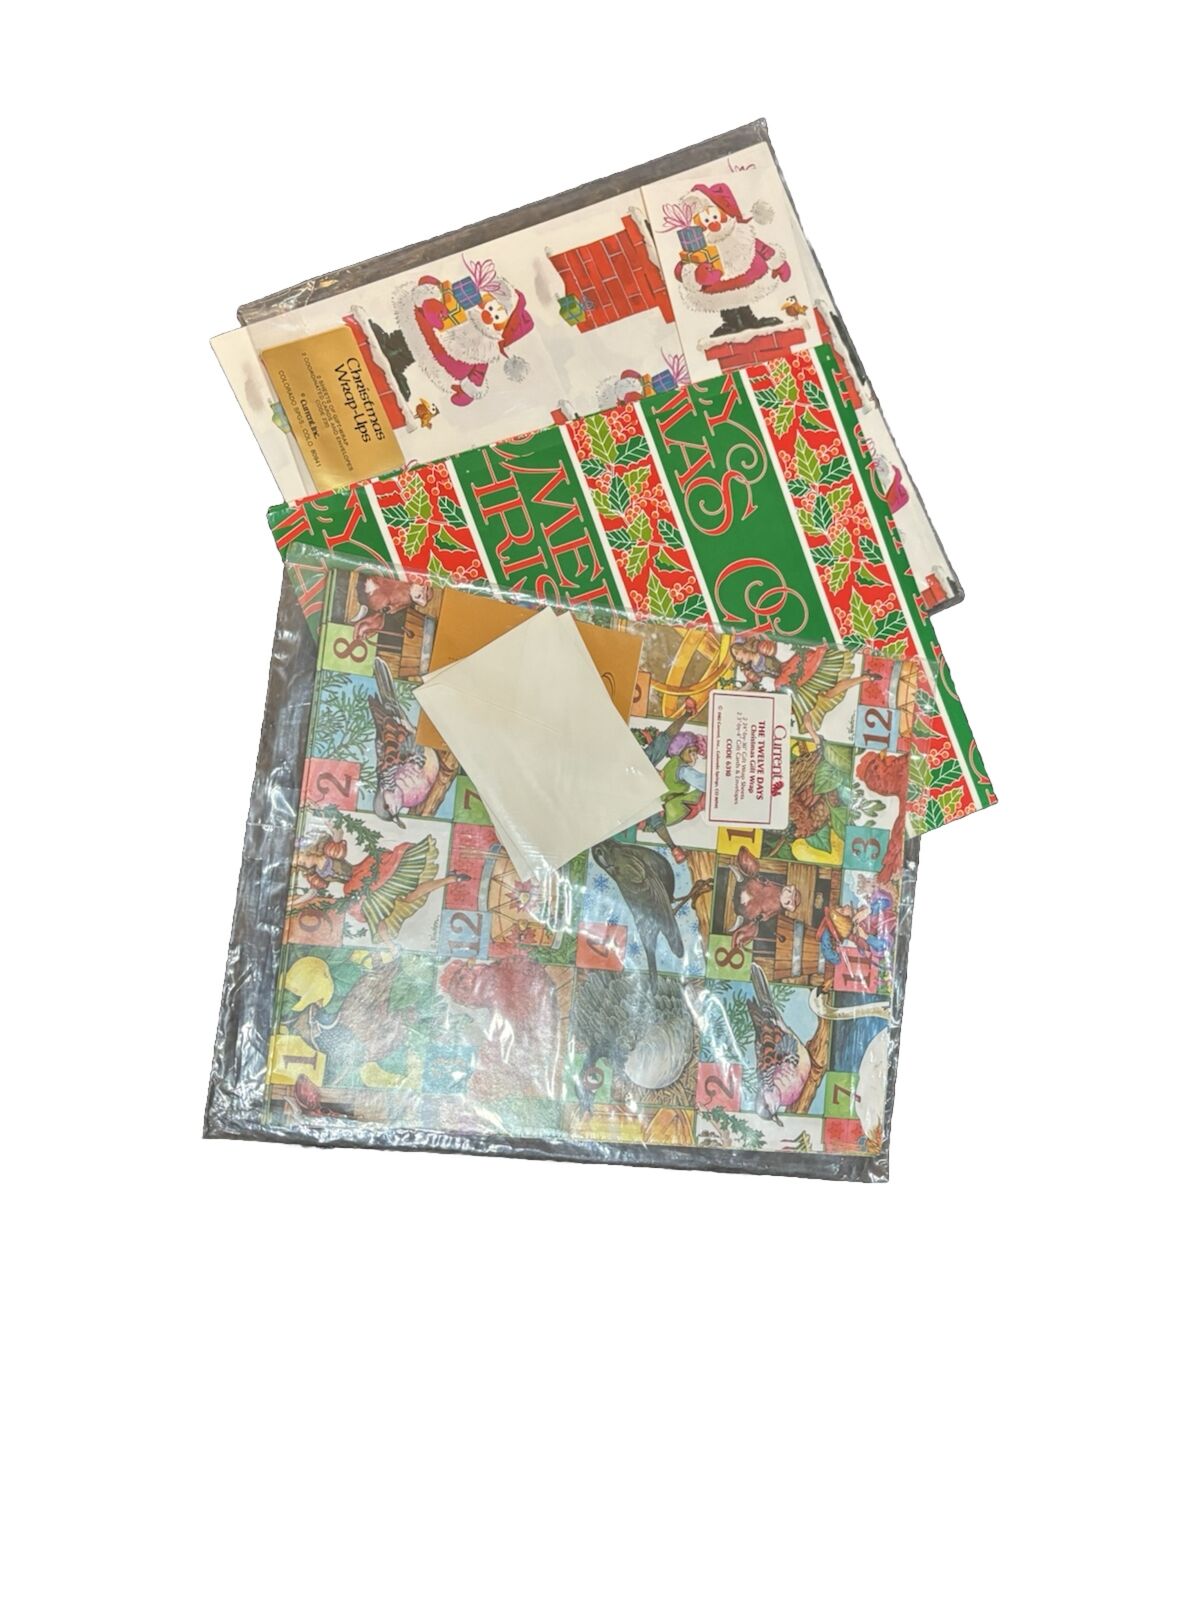 Vintage Current Inc Paper Christmas Gift Wrap Set 1980s Ephemera